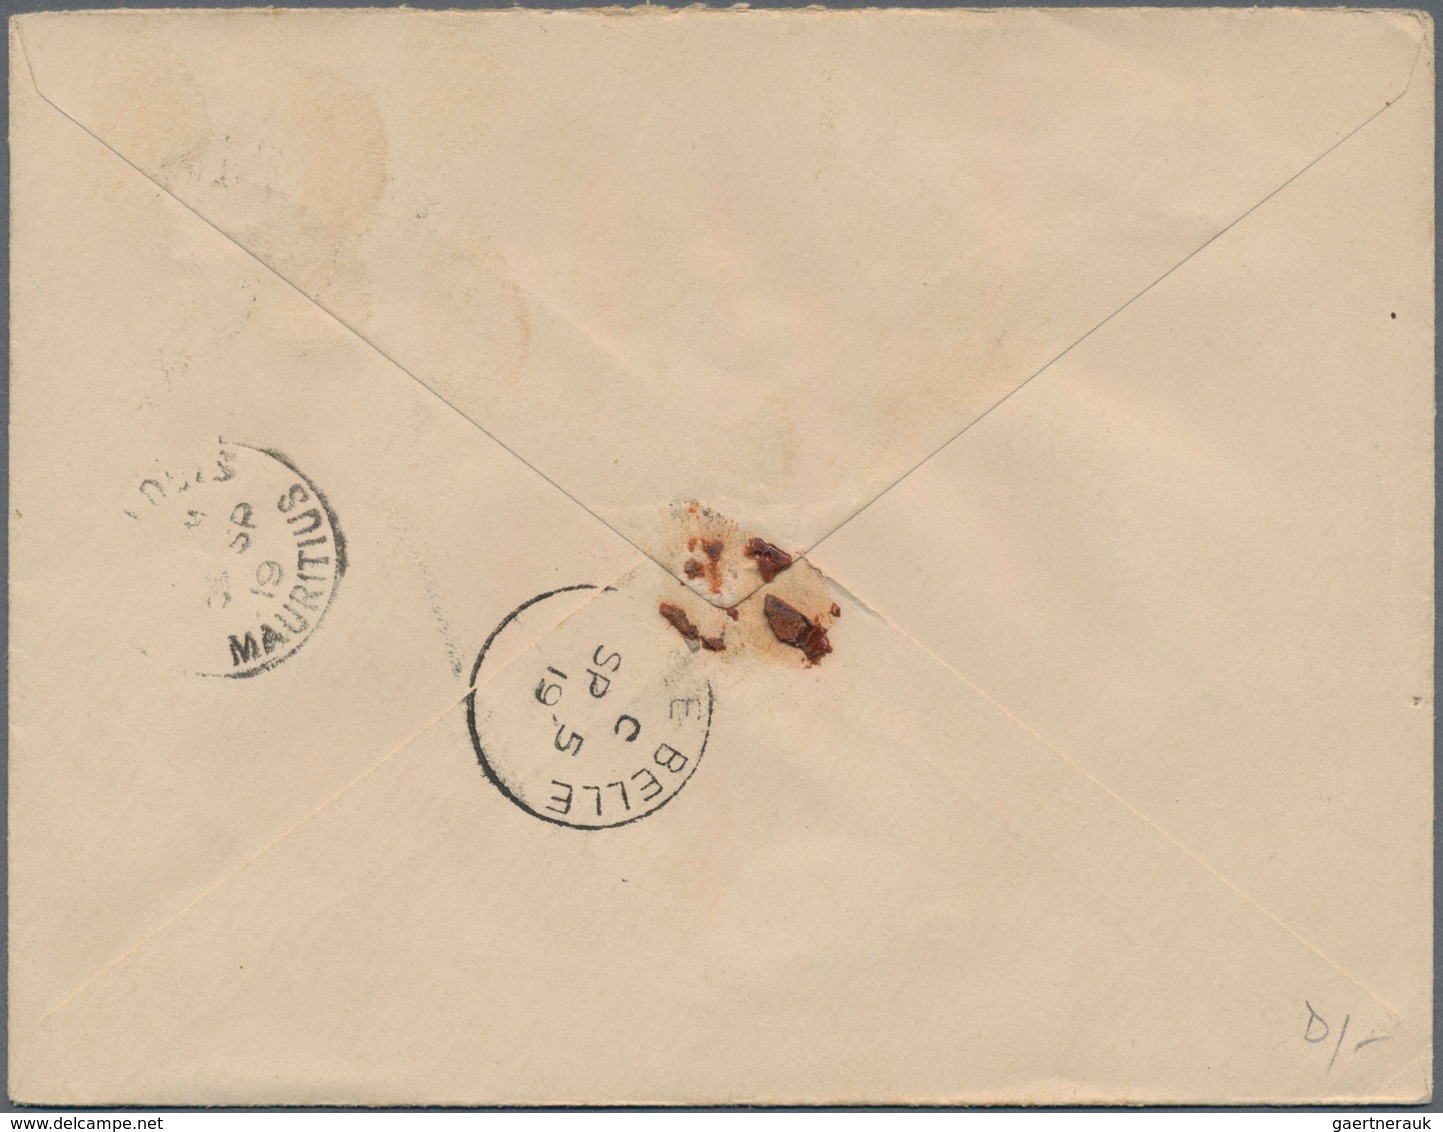 Mauritius: 1919. King George V 6c Carmine Envelope Cancelled Rose Belle C SP 5 19 Addressed To Merca - Mauritius (...-1967)